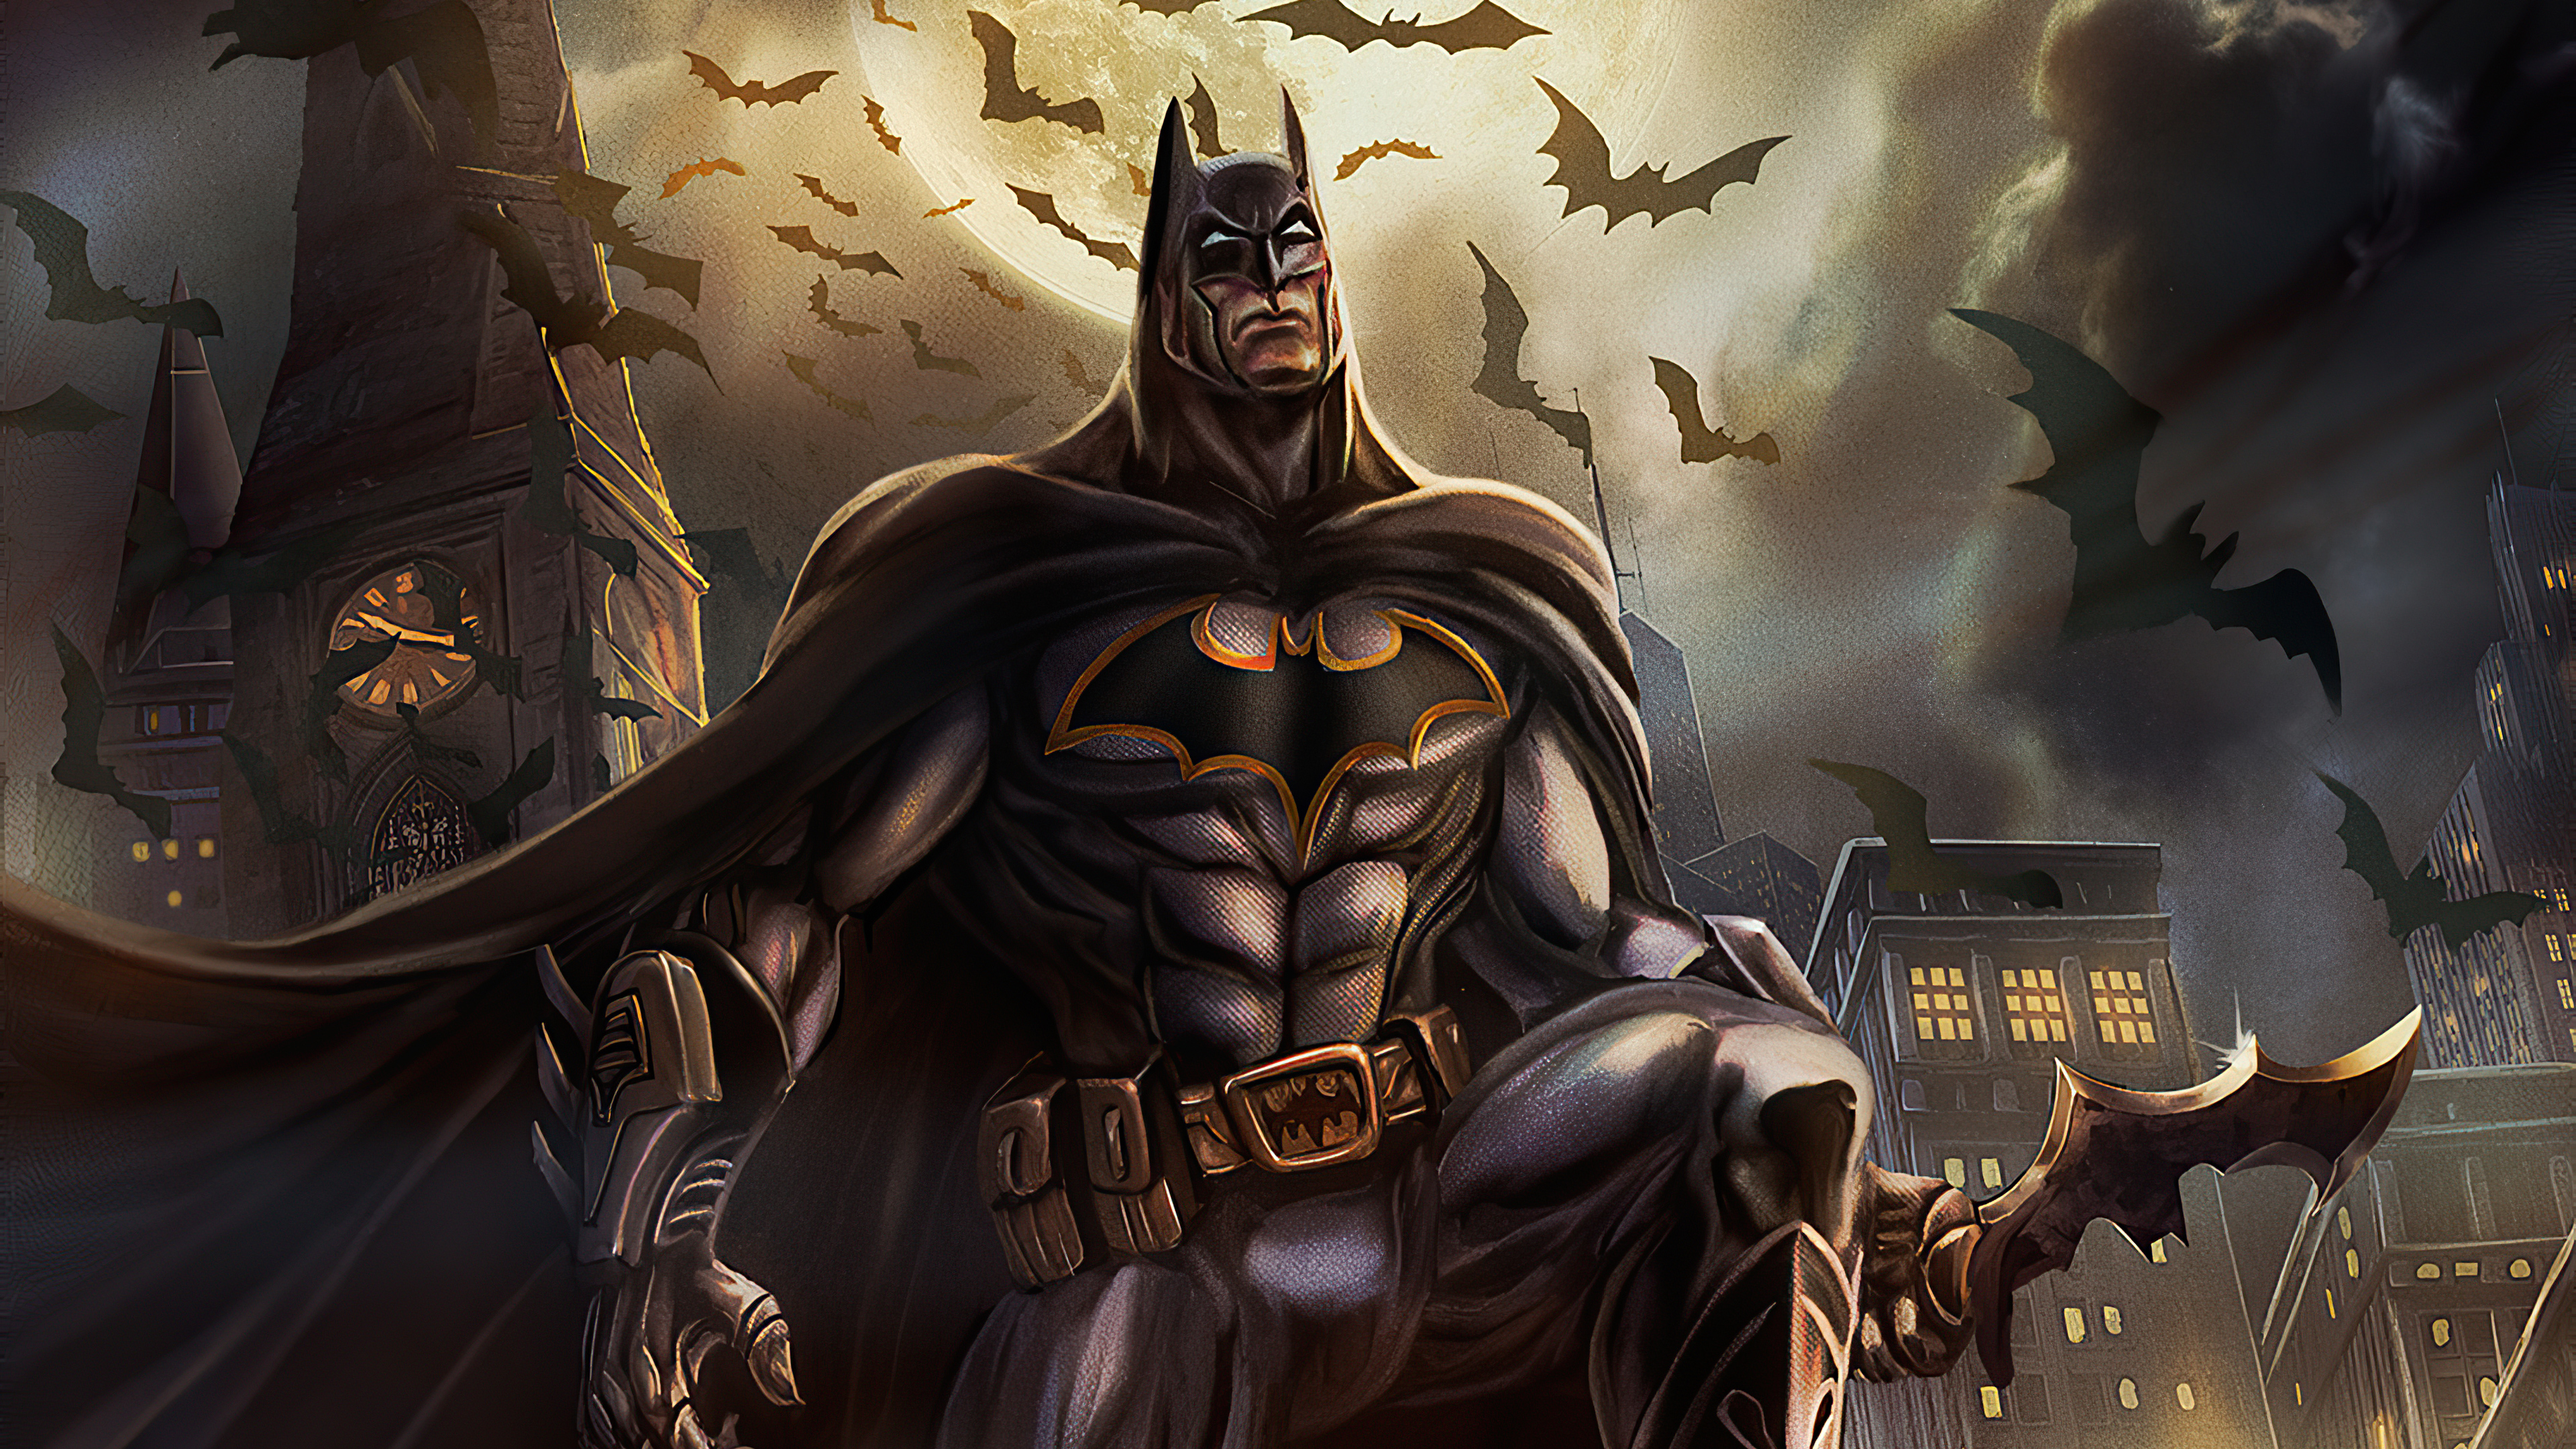 Batman 2020 DC Comic Wallpaper, HD Superheroes 4K Wallpapers, Images,  Photos and Background - Wallpapers Den